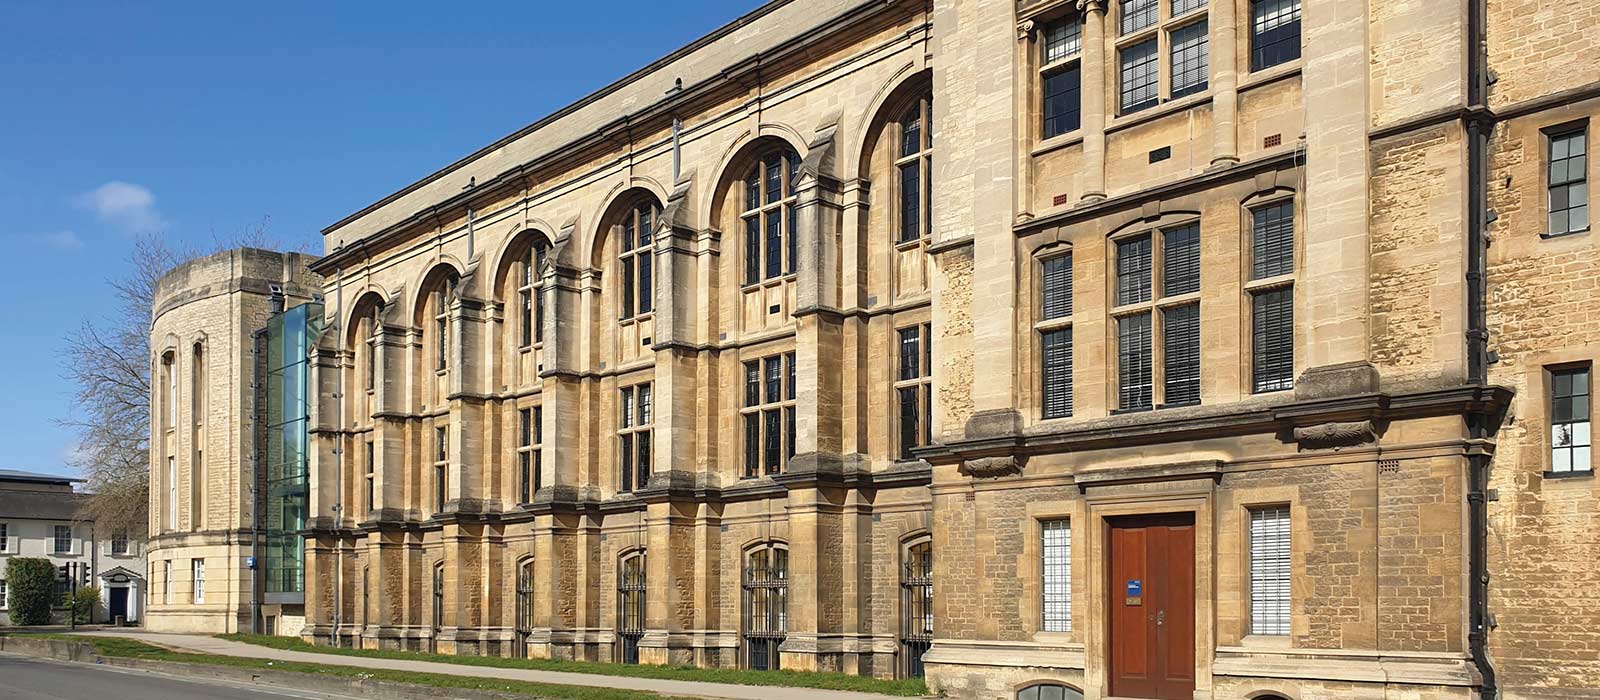 The historic façade of Reuben College in Oxford